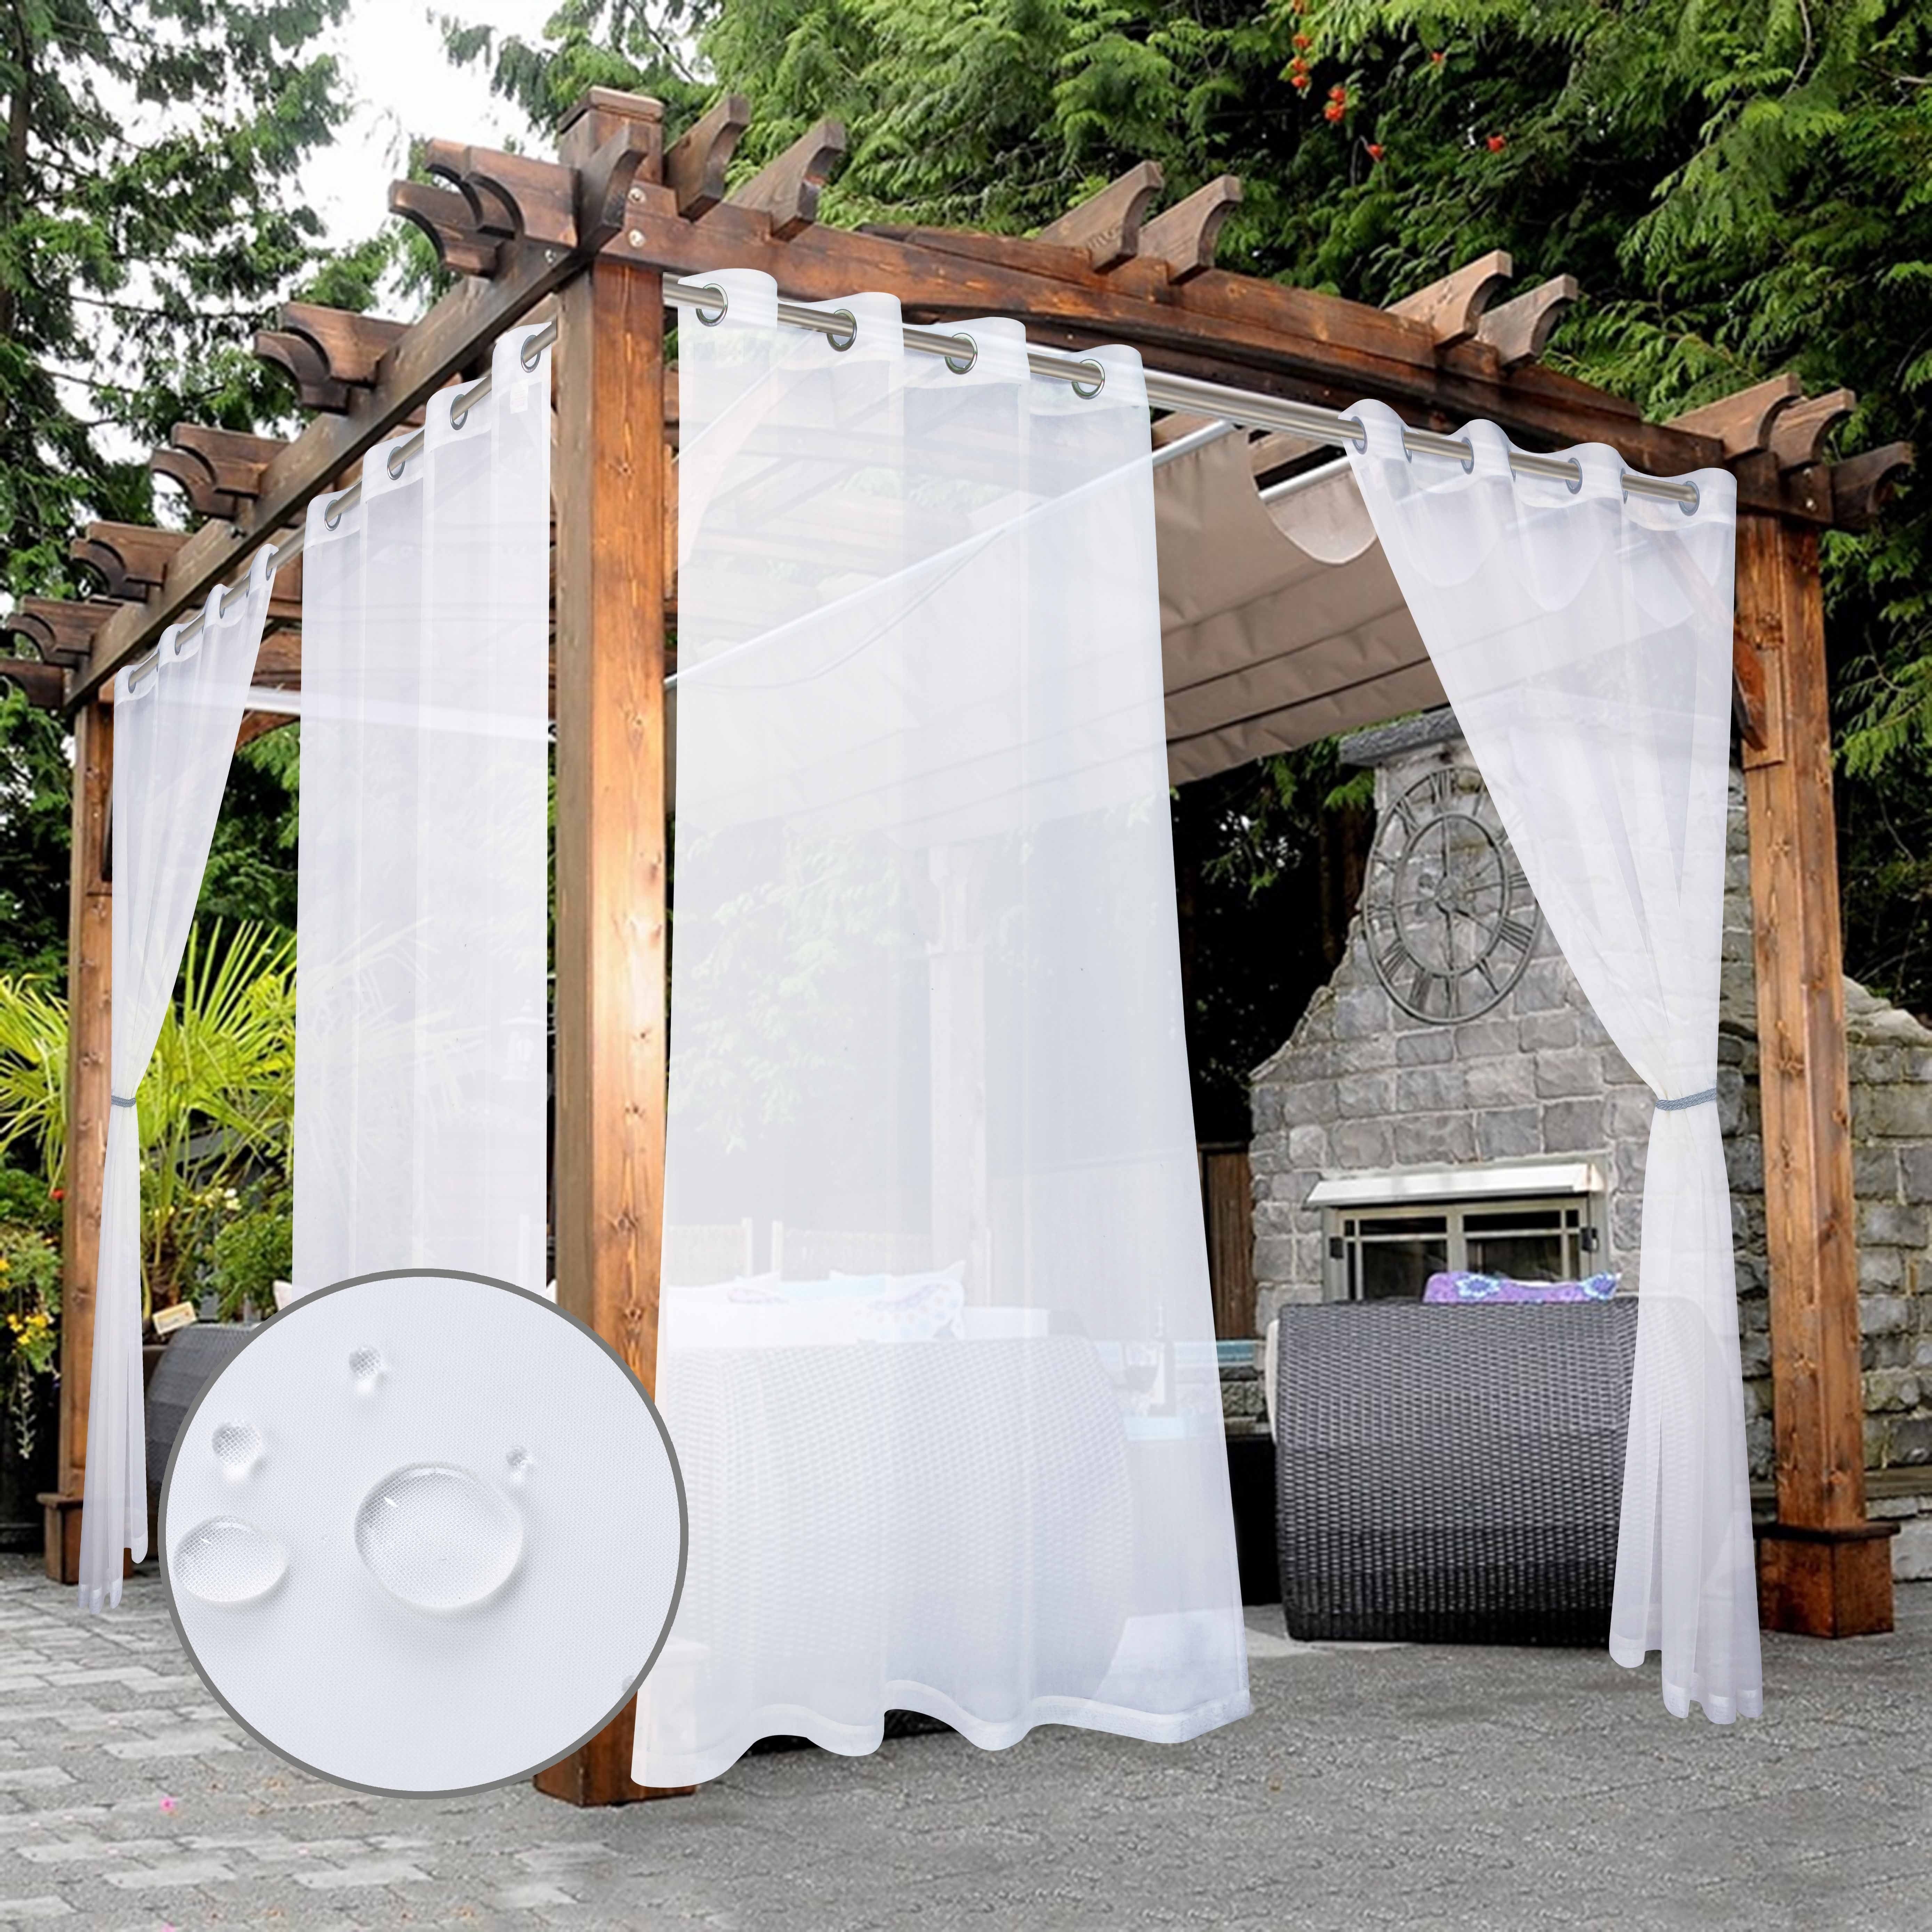 

Waterproof Sheer Outdoor Curtain Panel With Grommet Top - Versatile For Patio, Living Room, Bedroom, Porch, Pergola, Cabana Decor